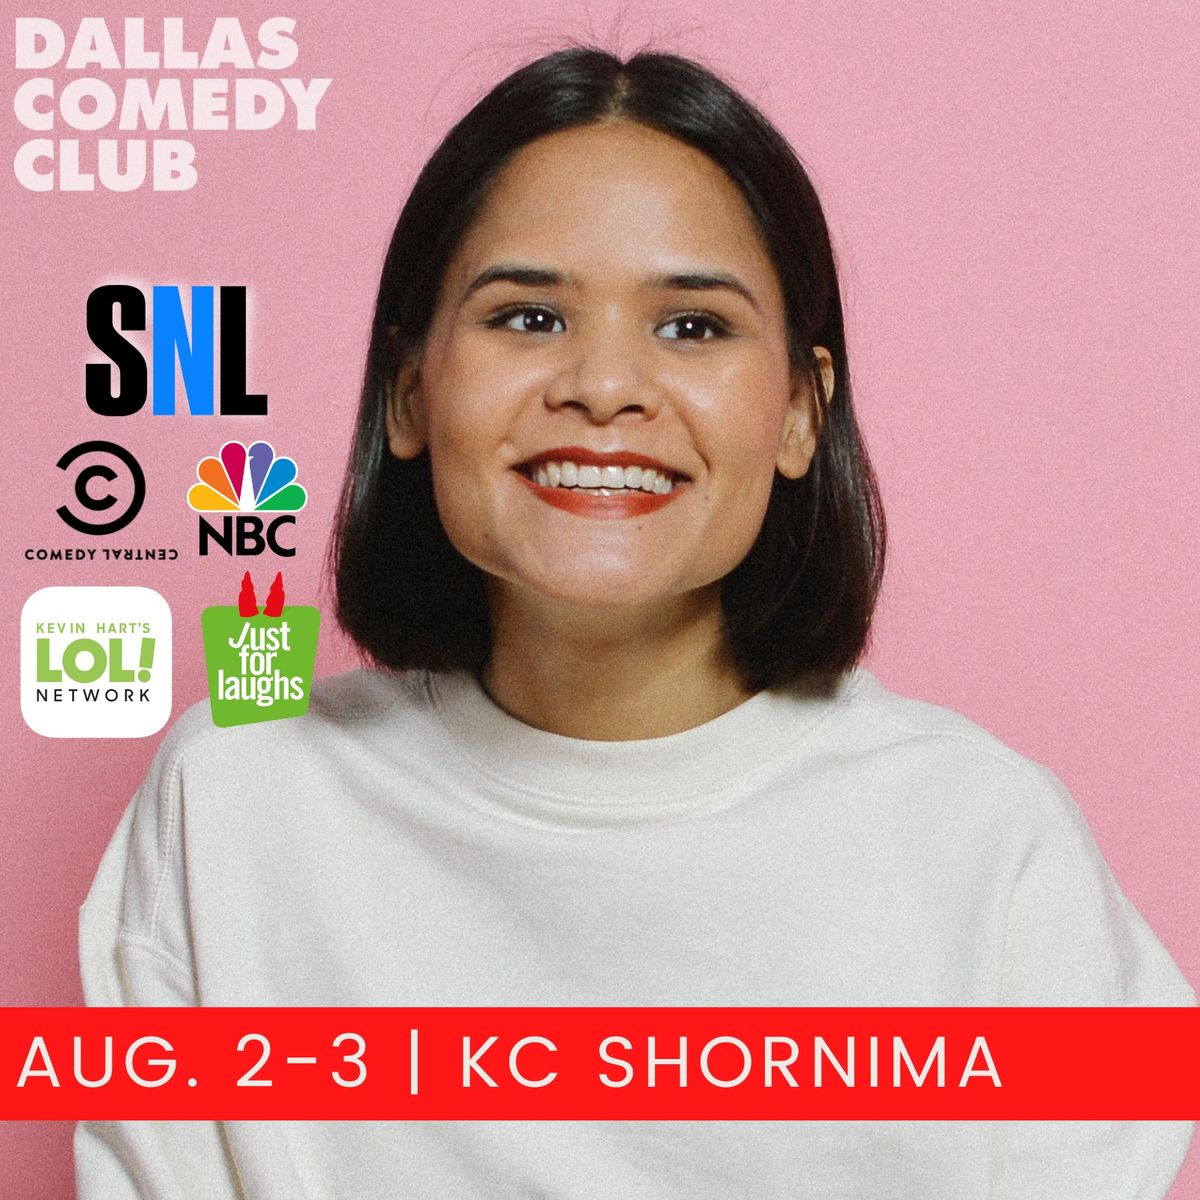 Dallas Comedy Club Presents: KC Shornima